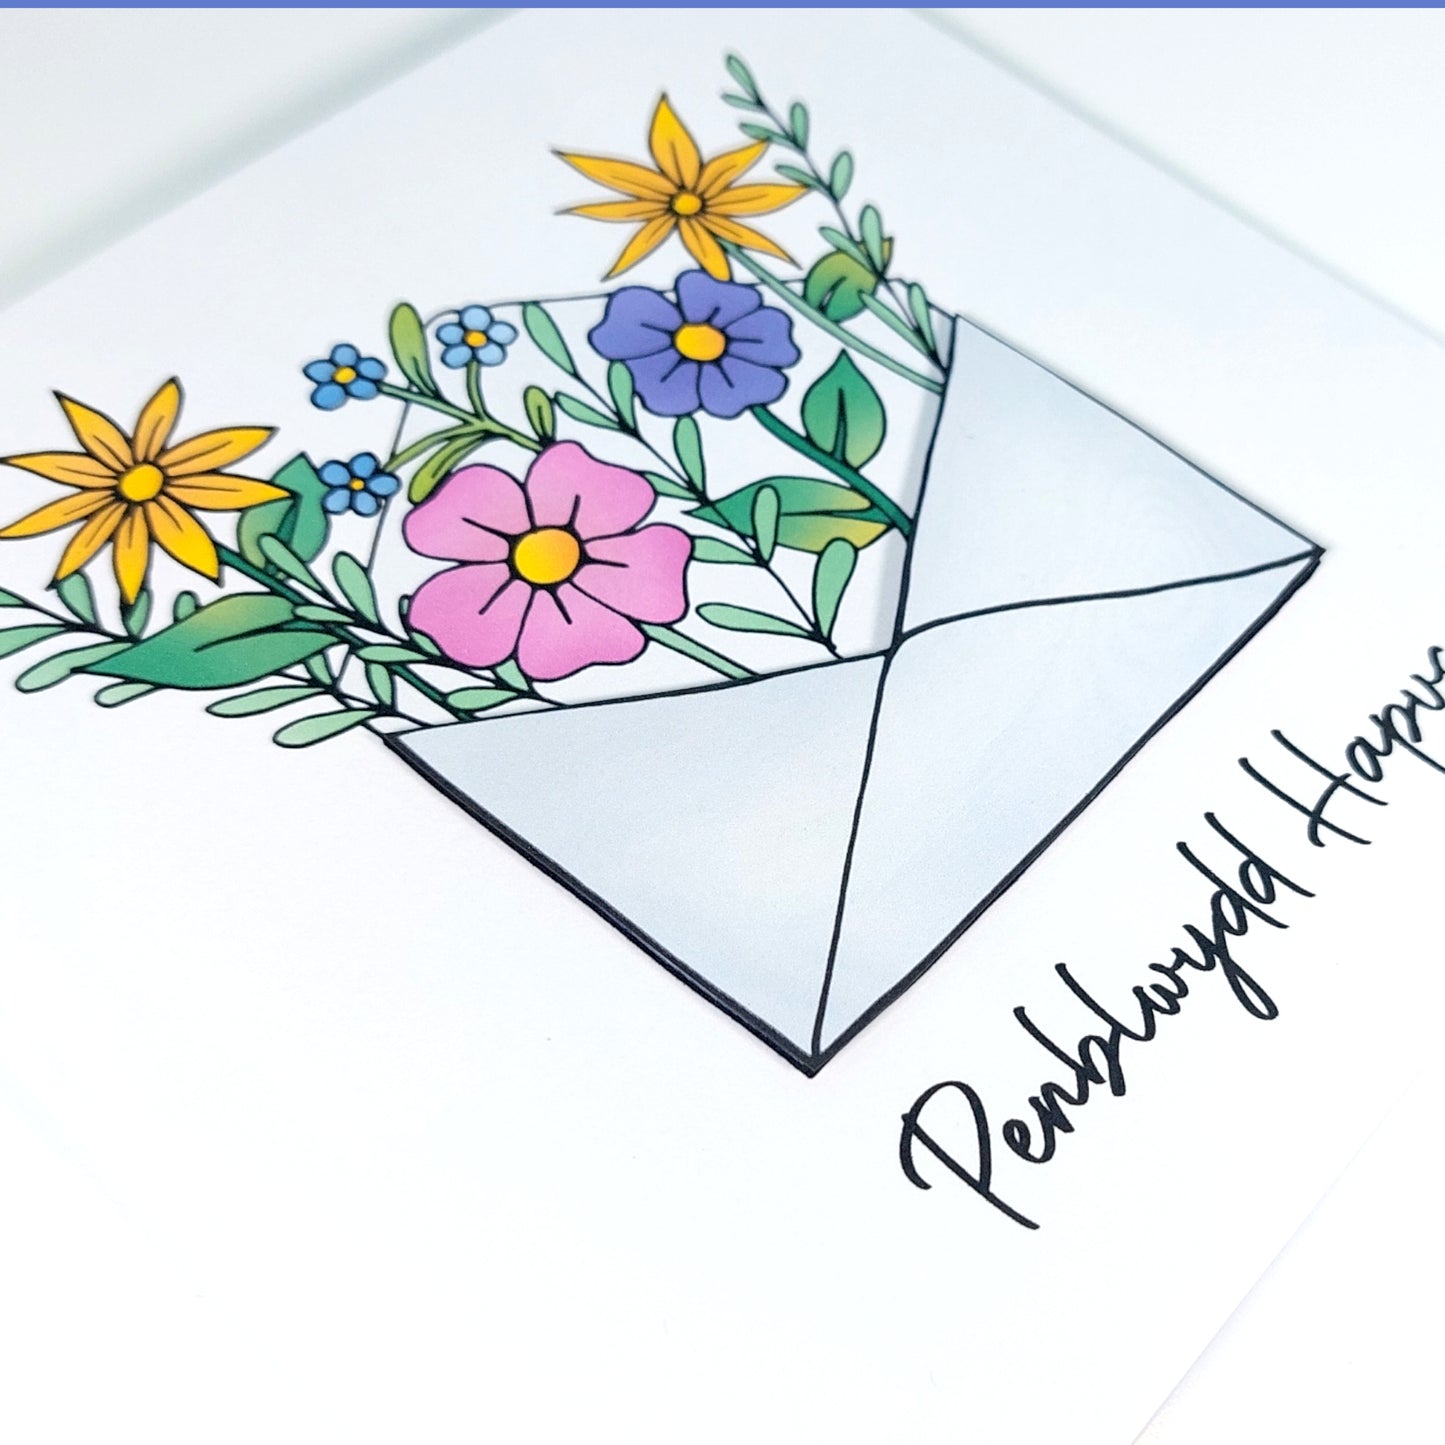 Flower Envelope Penblwydd Hapus (Birthday Card) Welsh Card